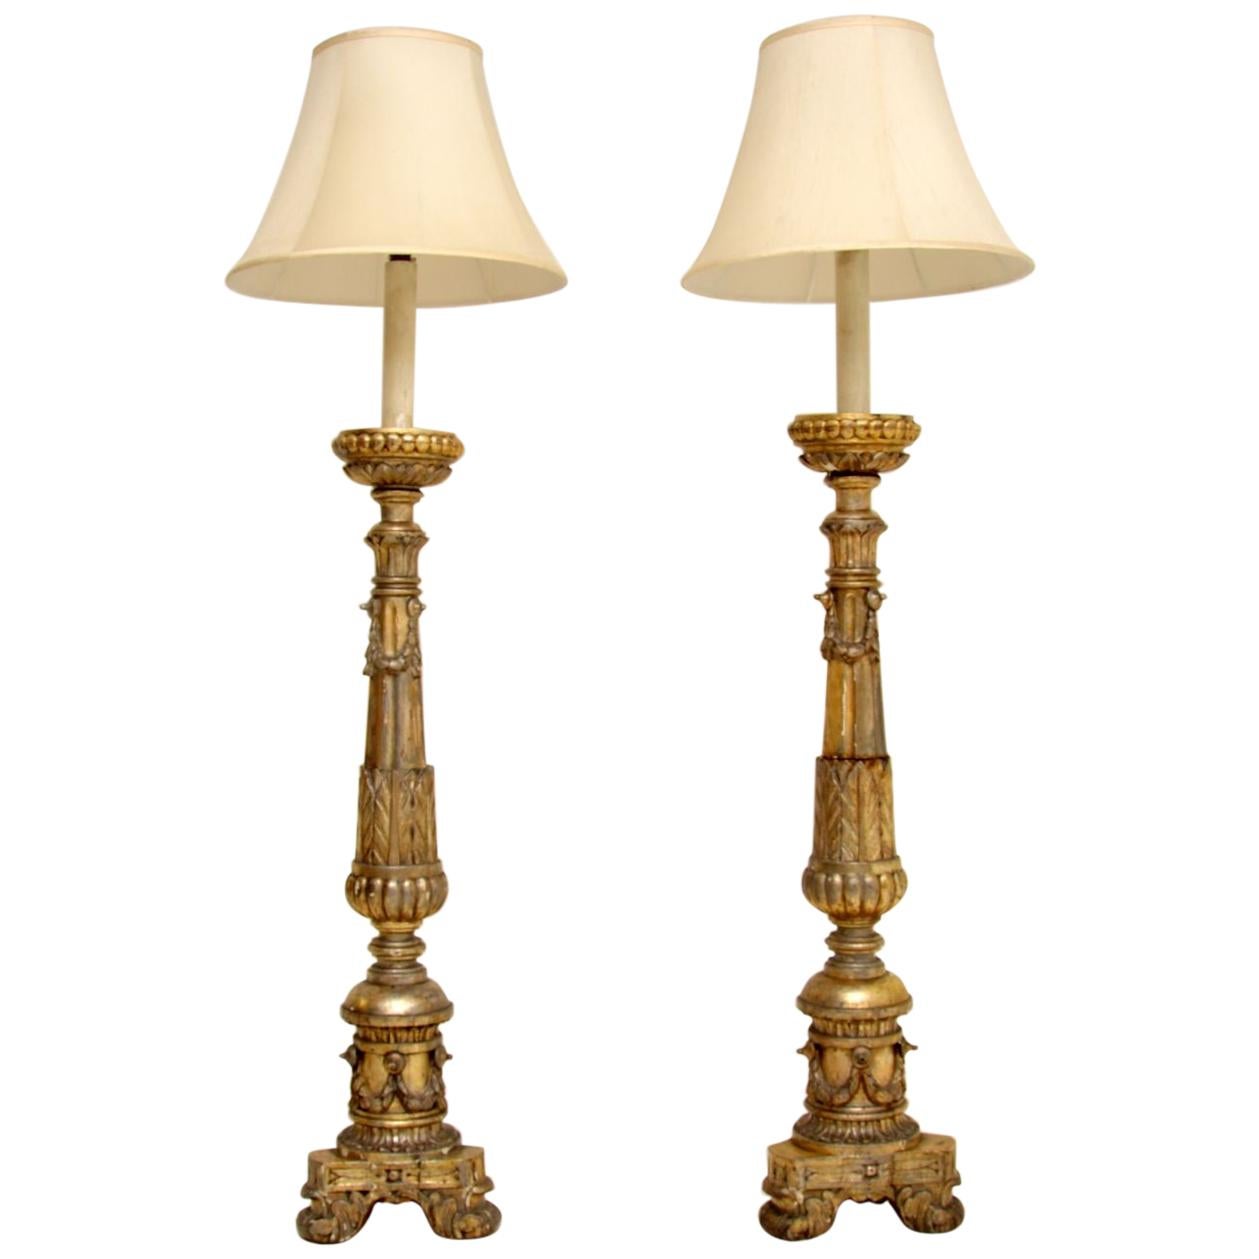 Pair of Antique Italian Silver Gilt Floor Lamps